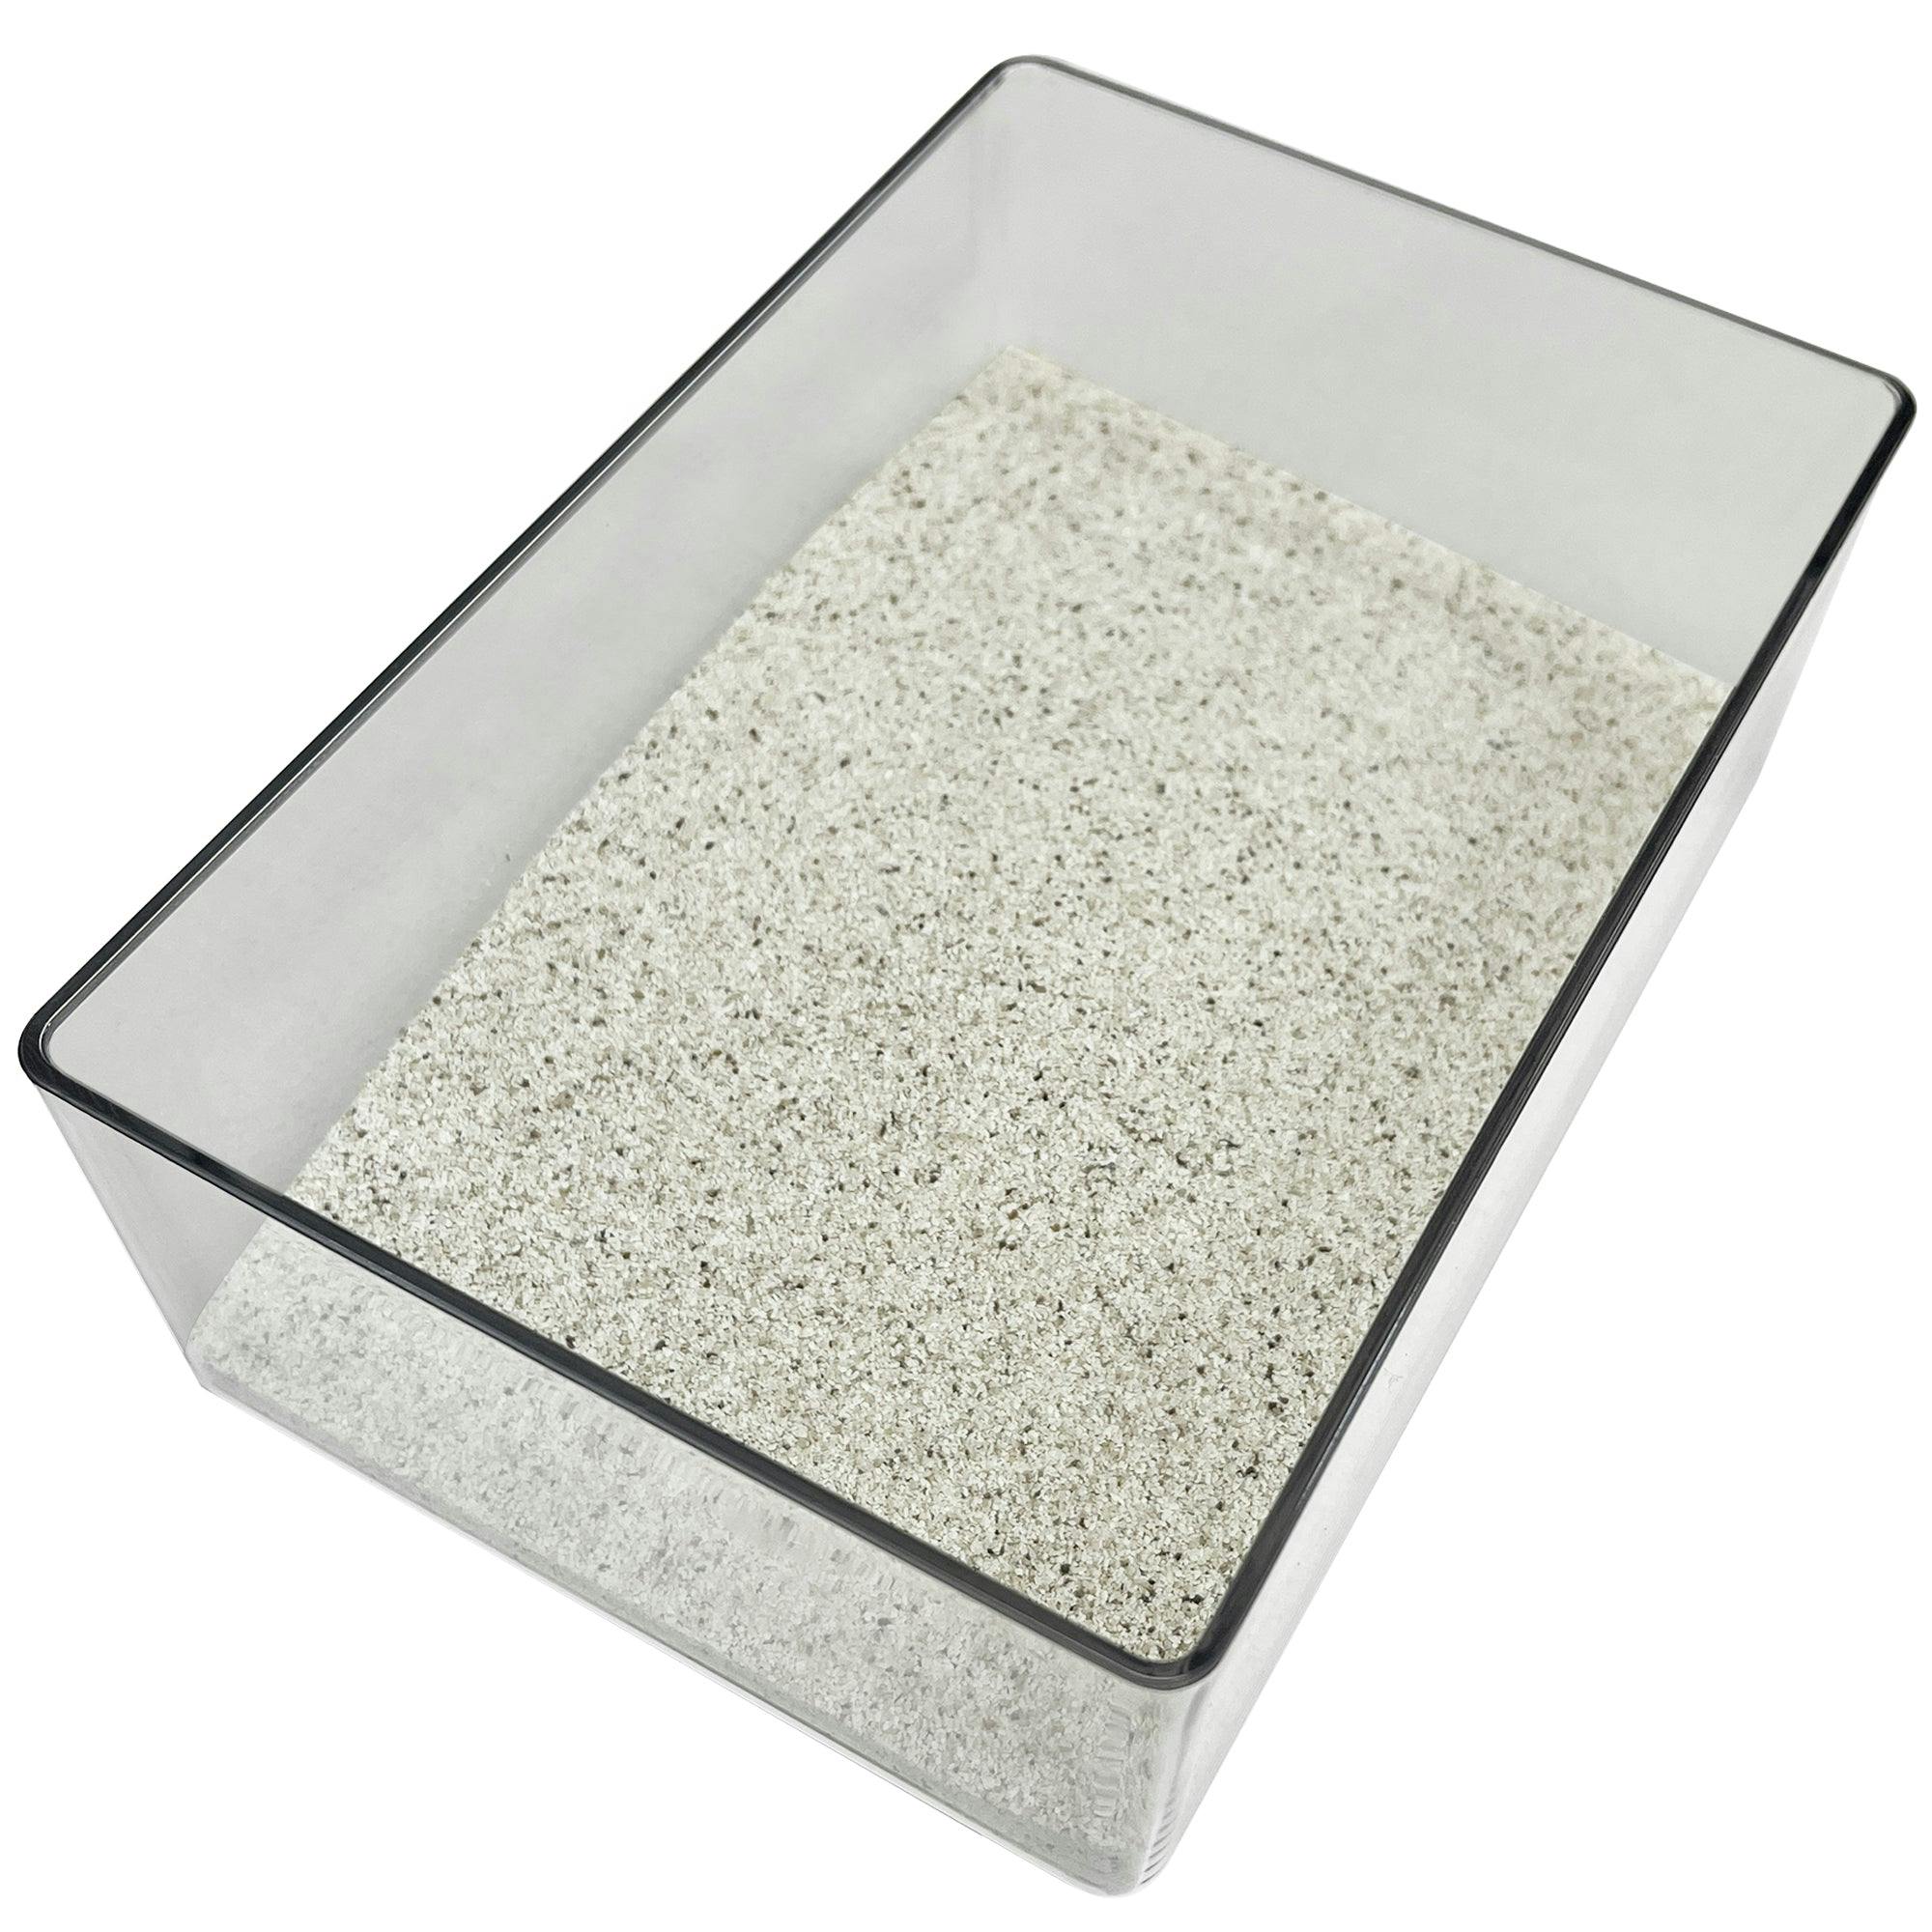 Chinchilla Dust 4.4 lb - Image 1